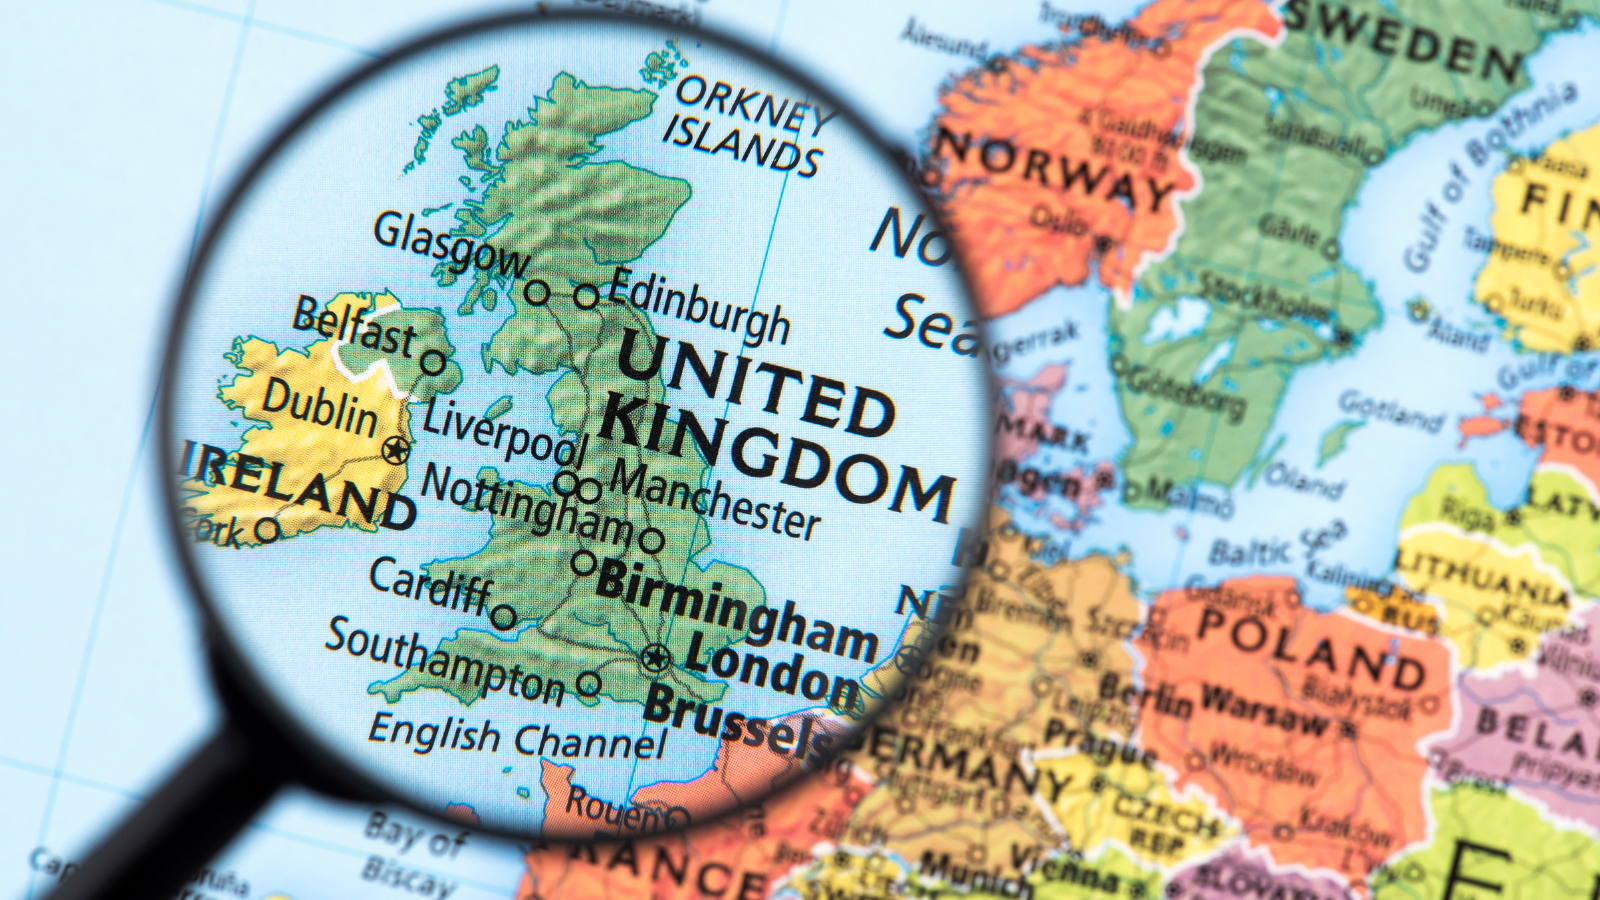 Around the uk. География Англии. Карта Великобритании. Великобритания карта географическая. Карта Великобритании со странами.